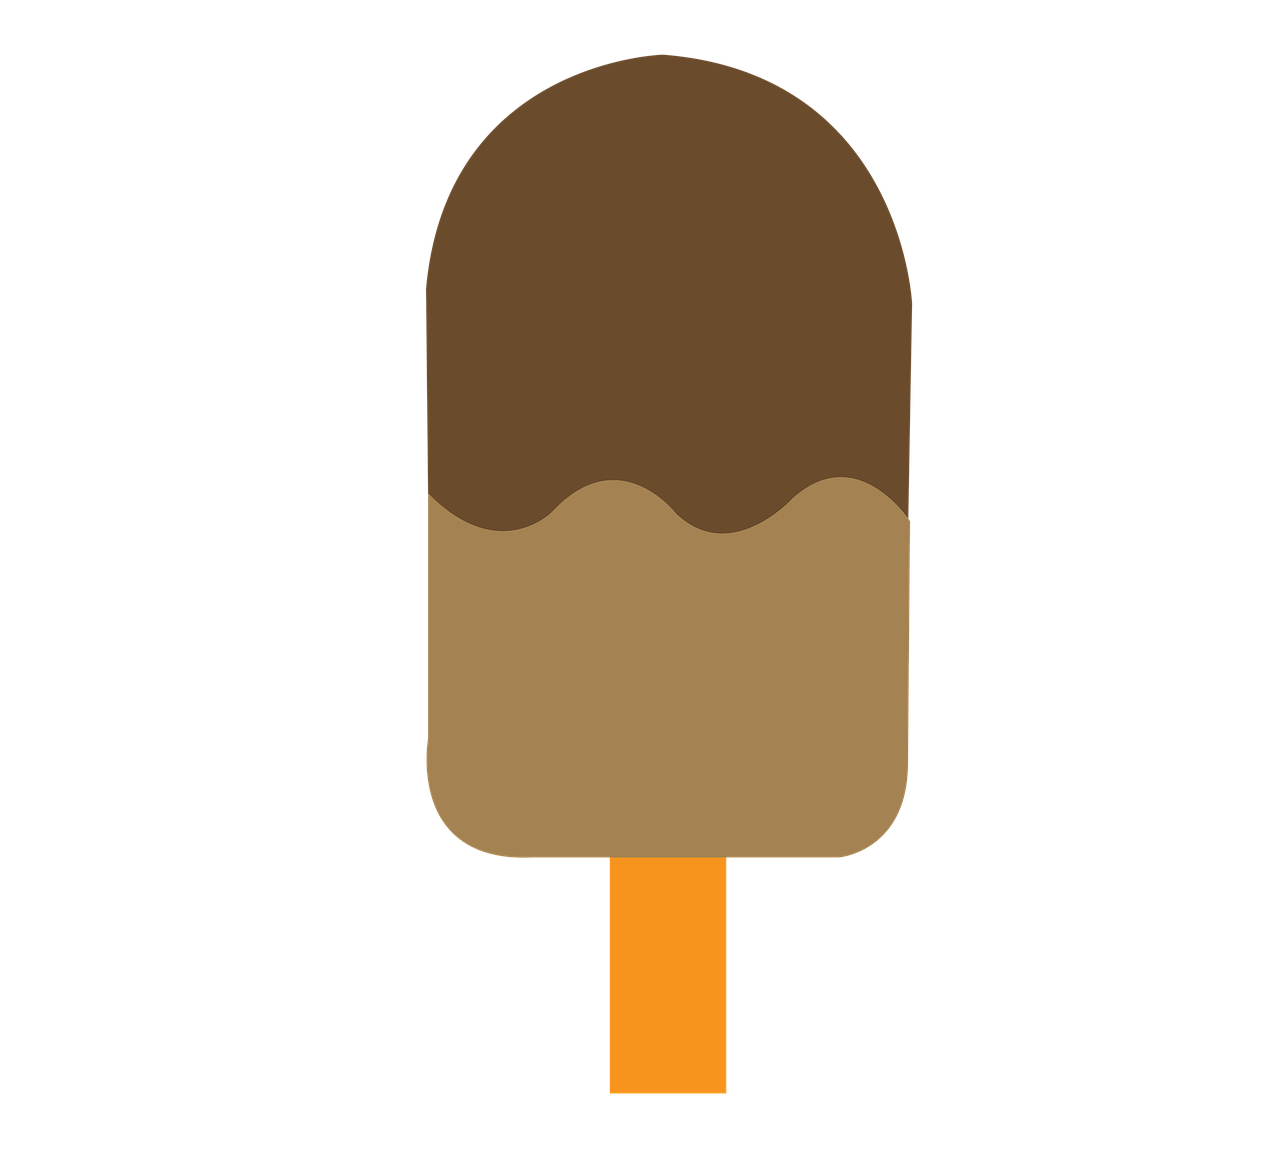 Icepop, Popsicle, Choco, Šokoladas, Pop, Maistas, Saldus, Ledas, Šaltas, Desertas